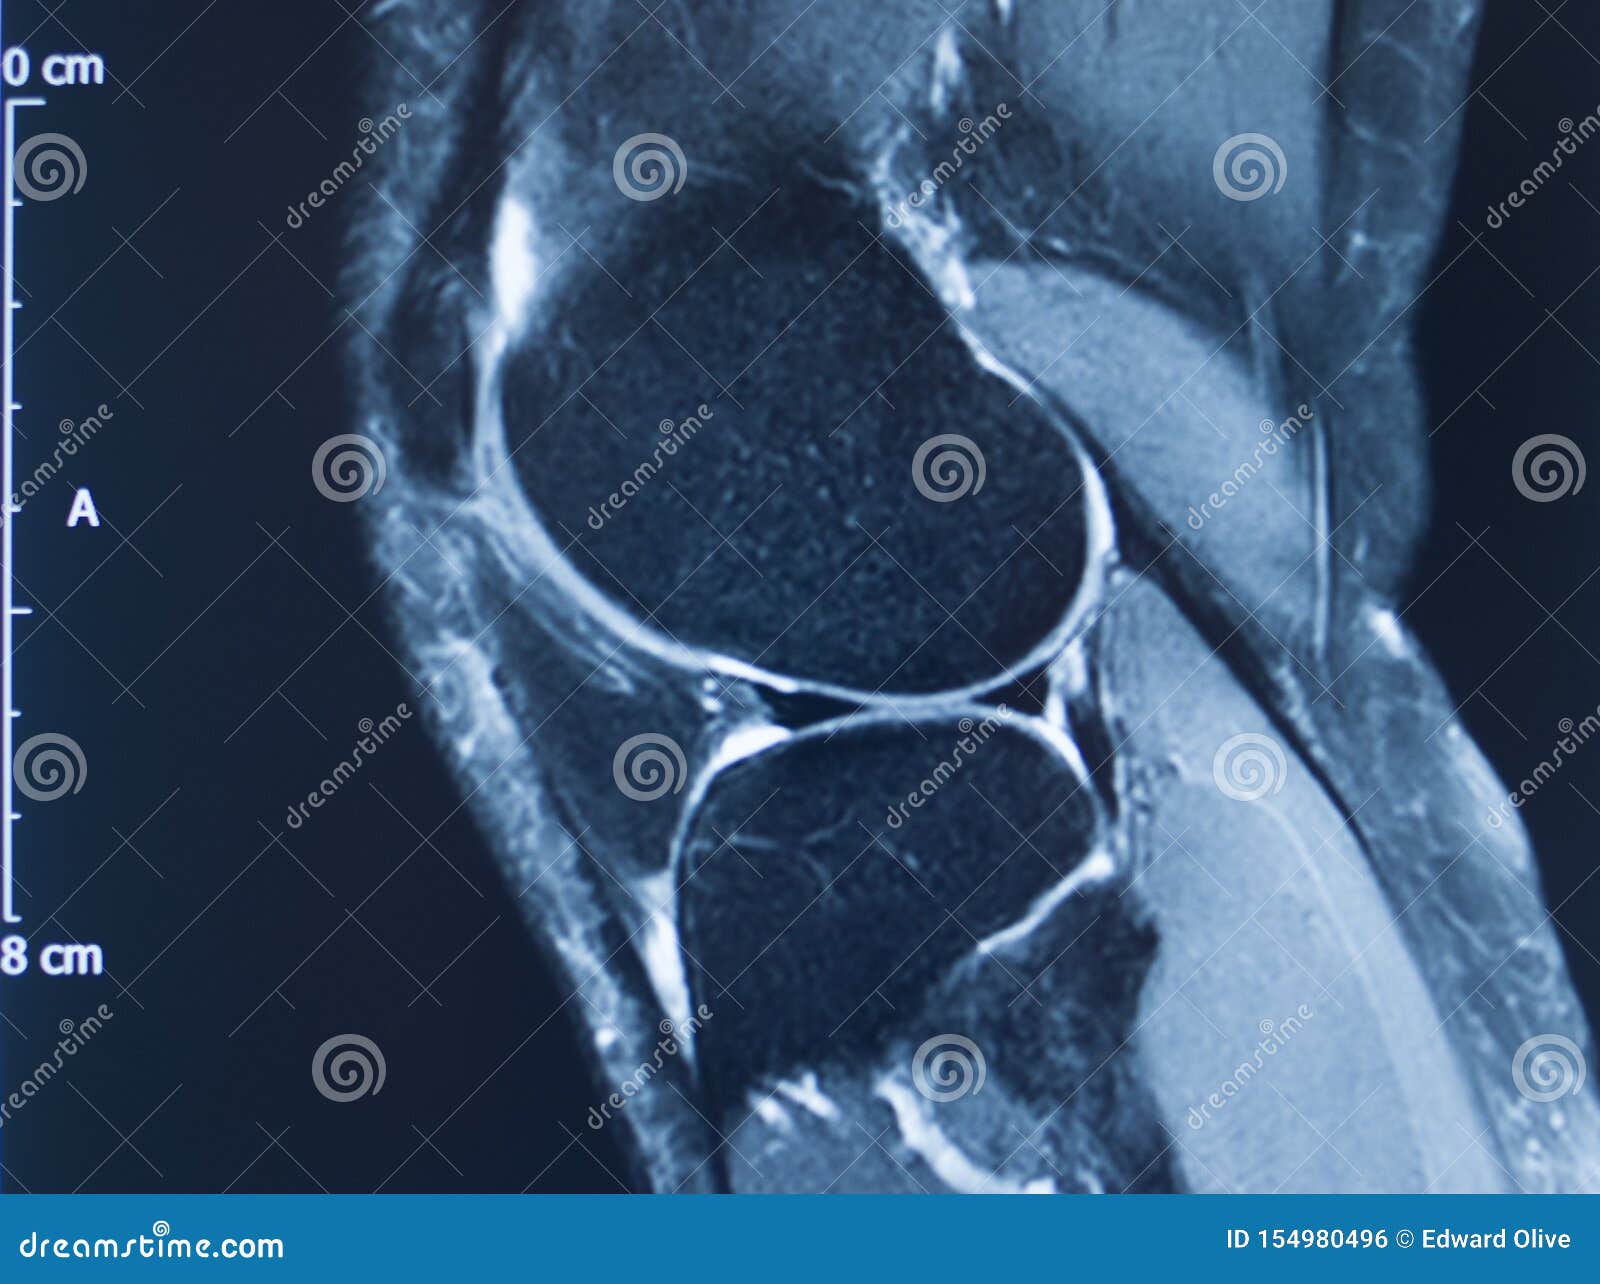 Knee injury mri mcl tear stock photo. Image of human - 154980496